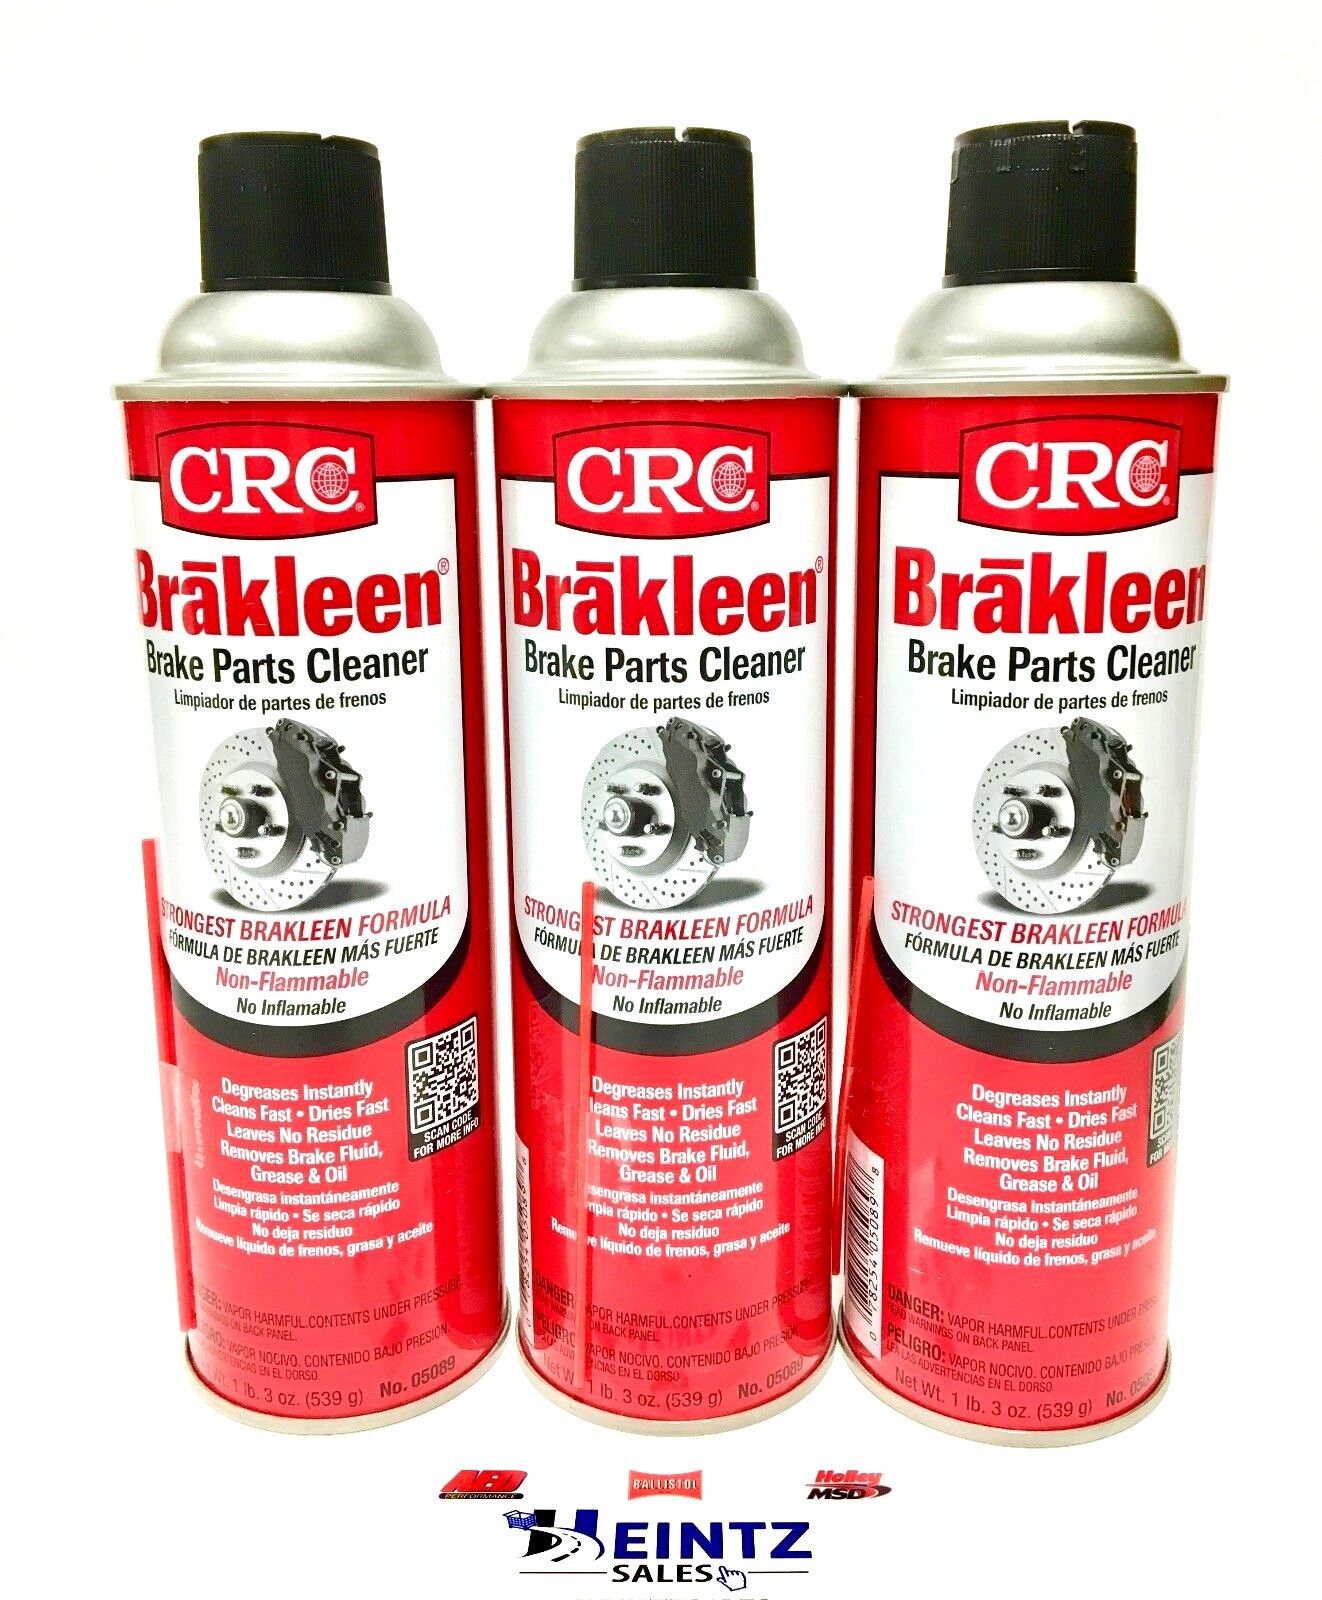 CRC Brakleen 05089 Brake Parts Cleaner, Degreaser - 19 oz can (3 PACK)